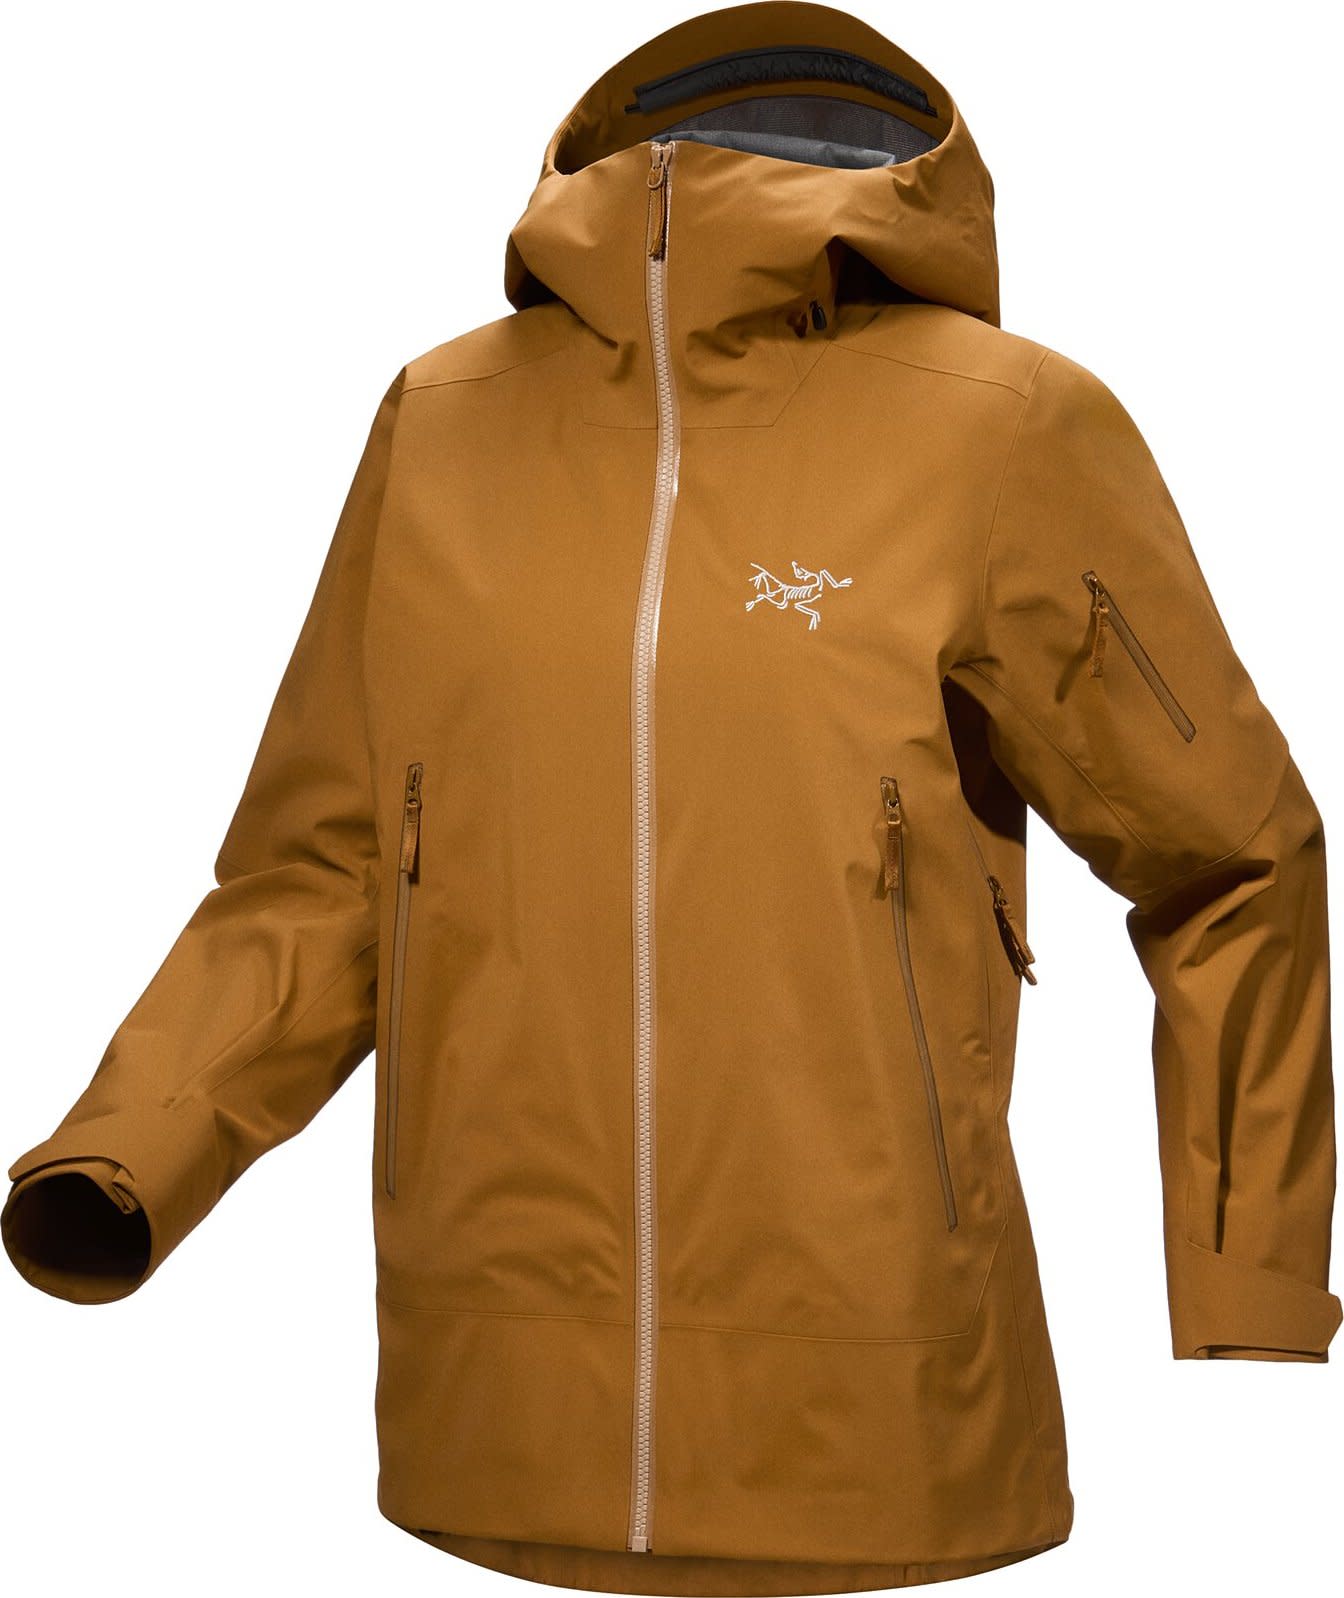 Arc'teryx Women's Sentinel Jacket Yukon